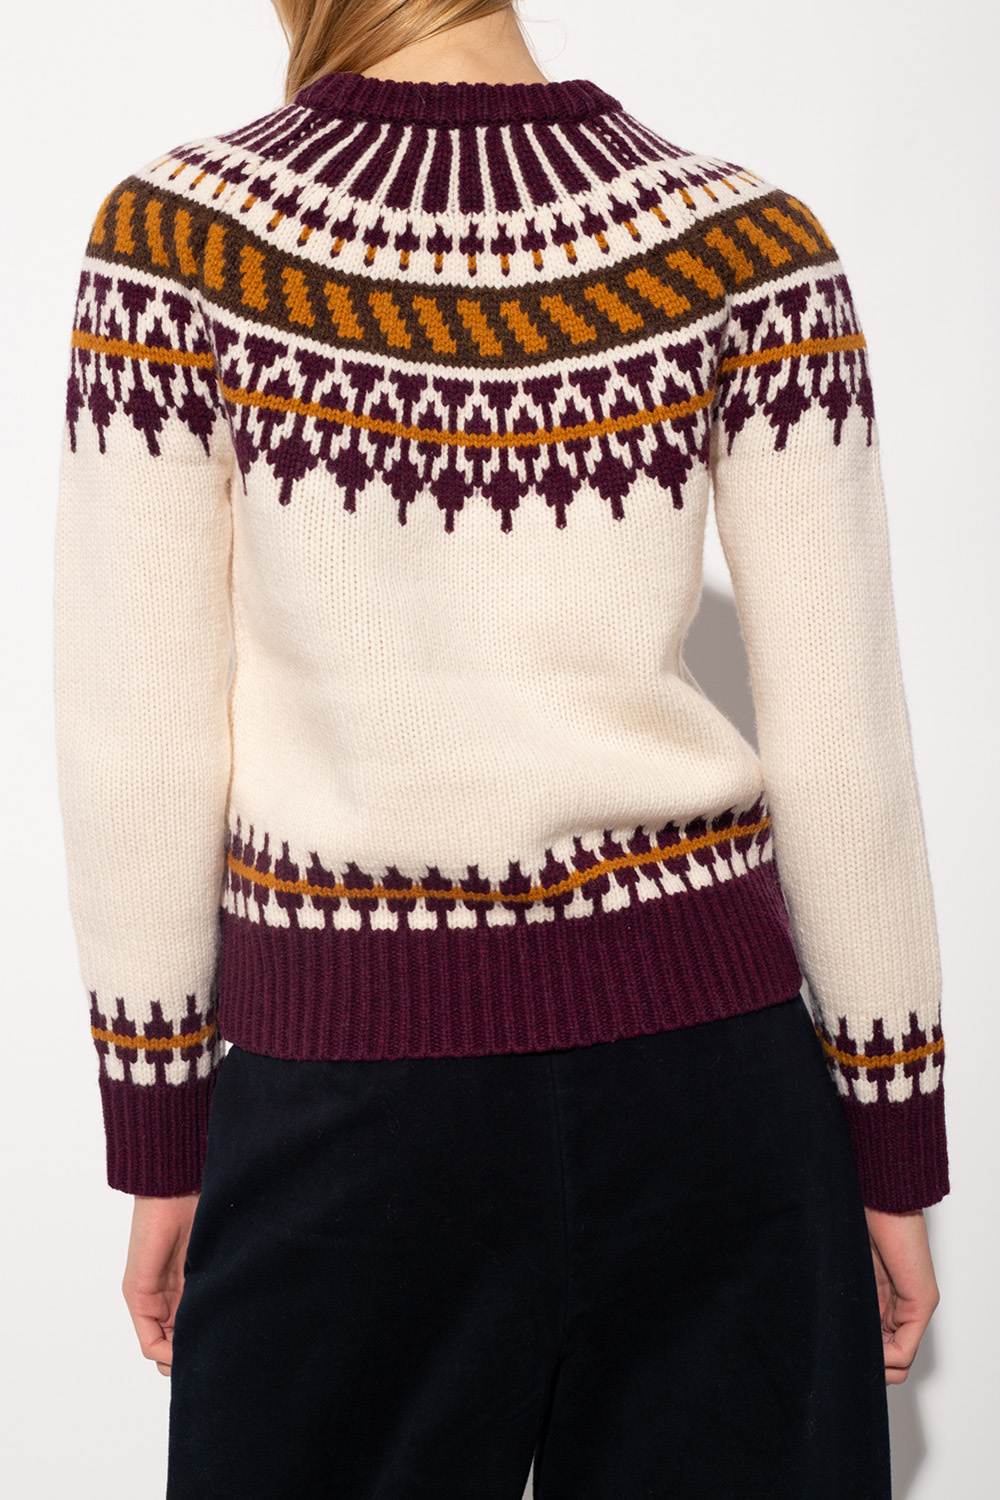 Tory Burch Wool sweater